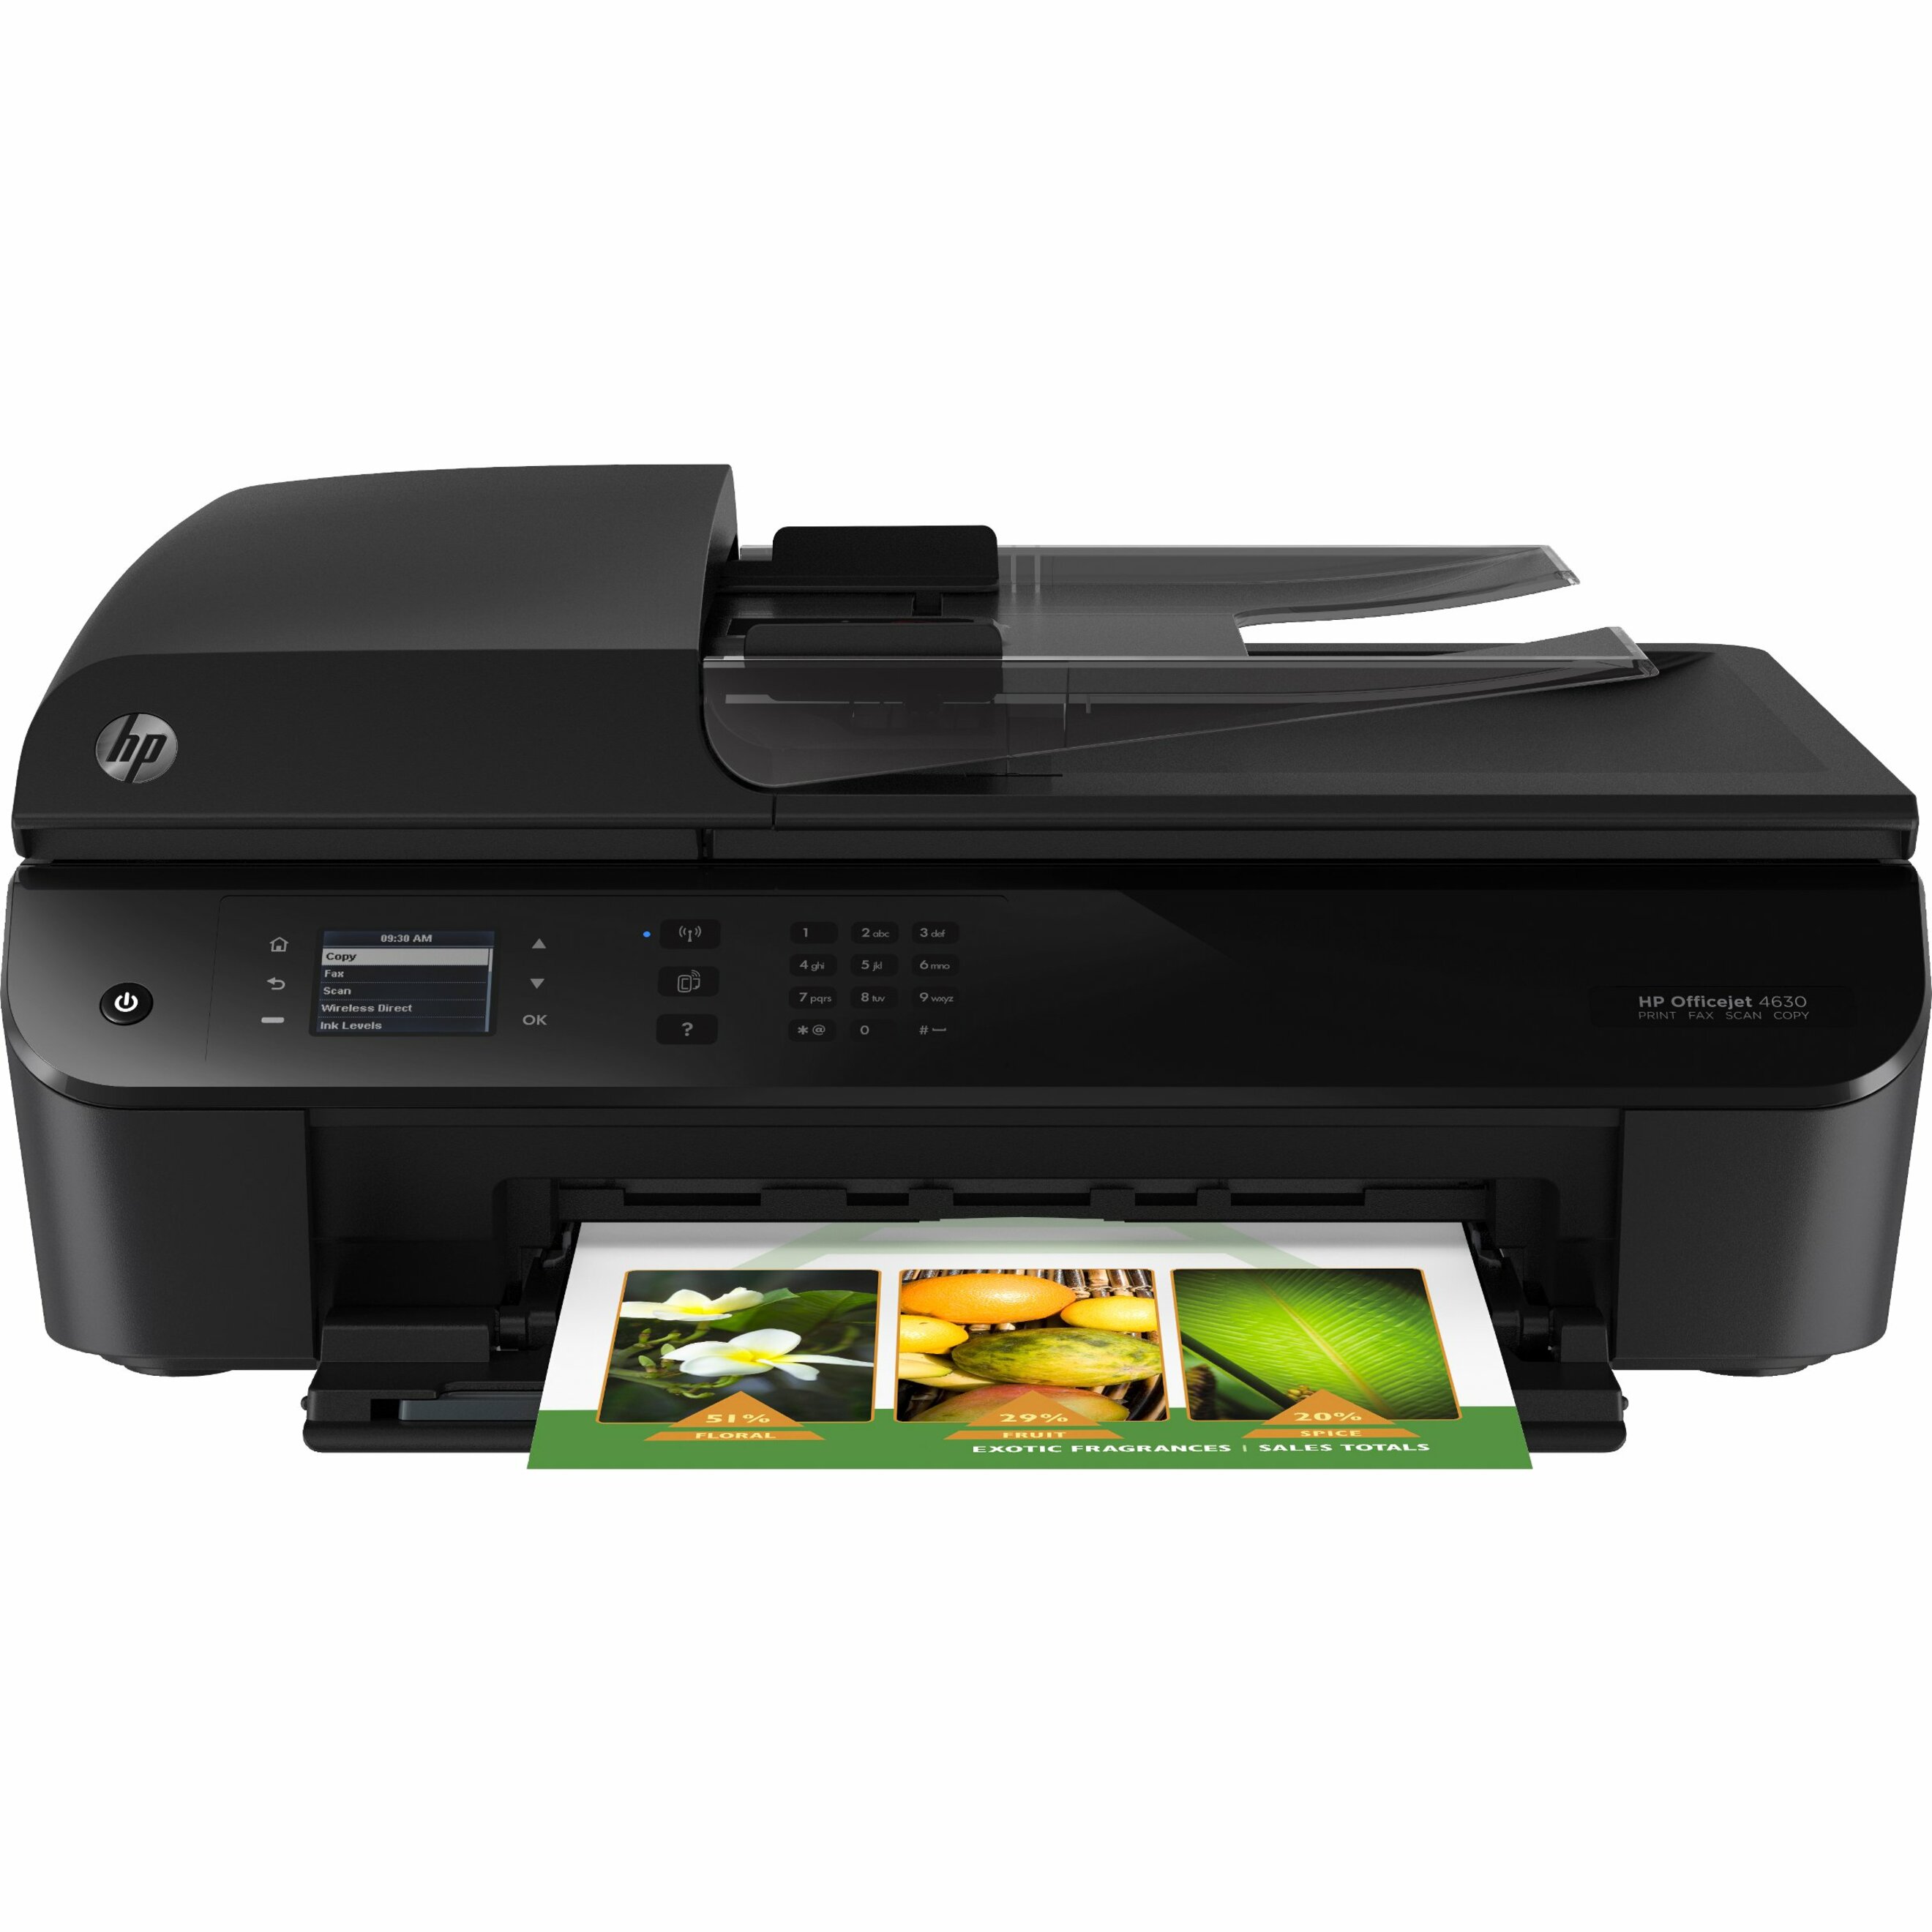 HP Officejet 4630 Wireless Inkjet Multifunction Printer, Color - image 3 of 7